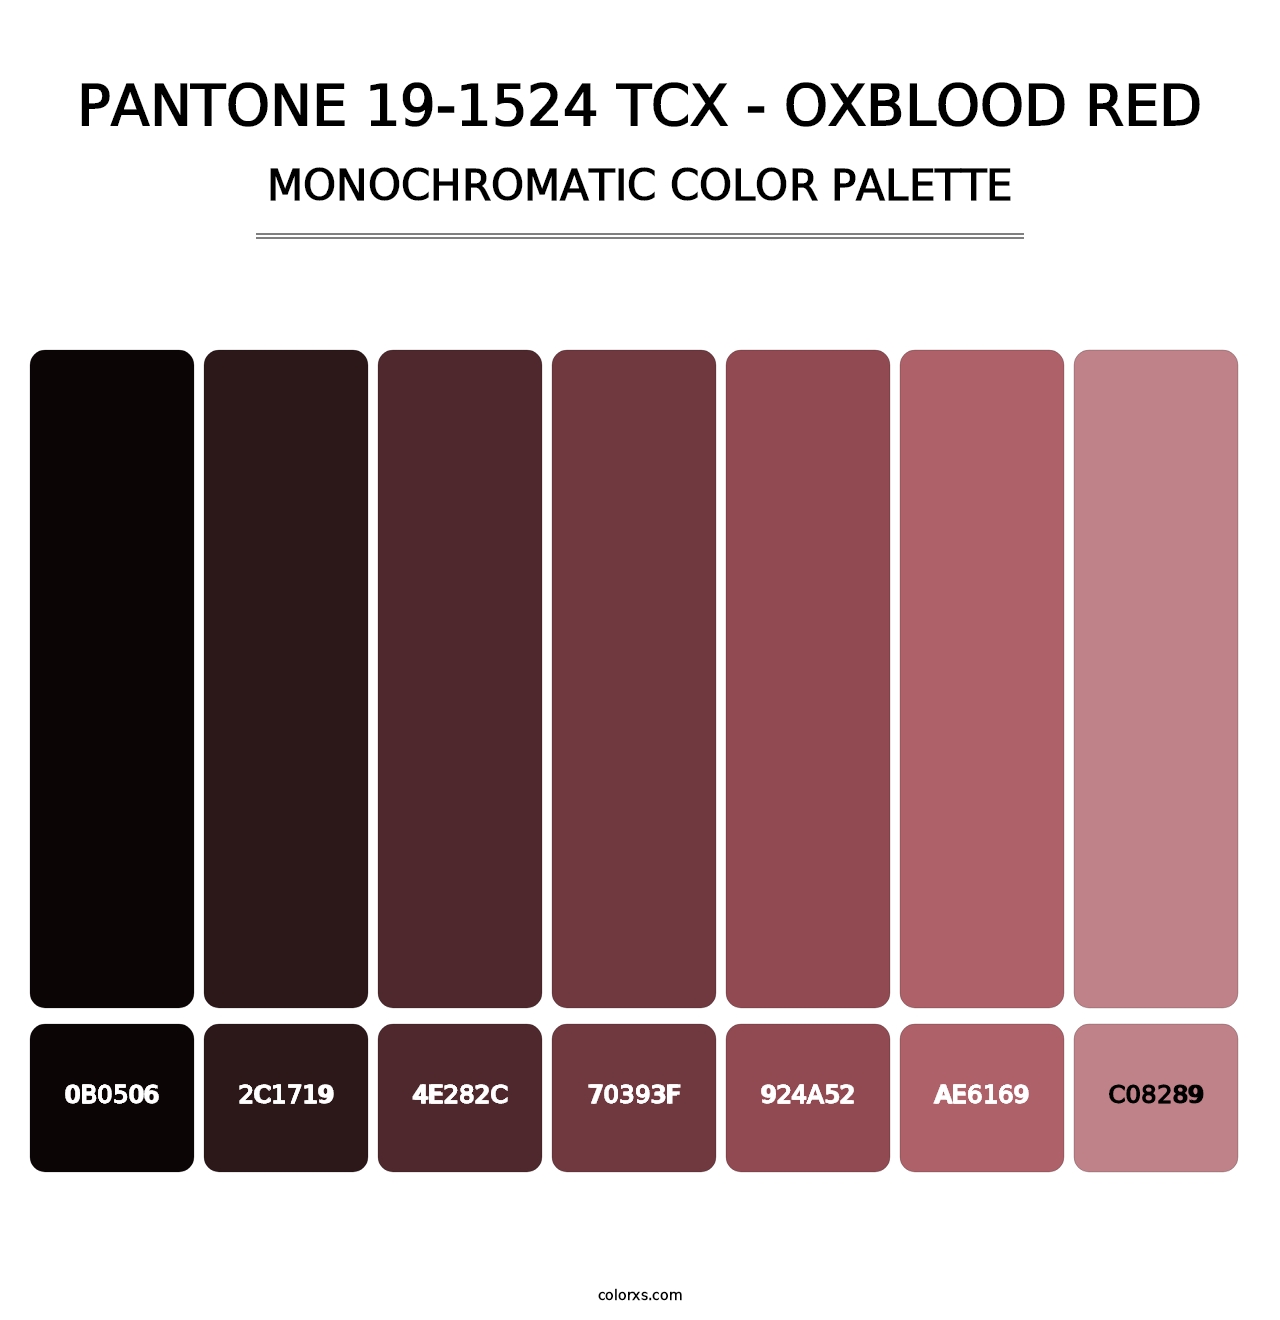 PANTONE 19-1524 TCX - Oxblood Red - Monochromatic Color Palette